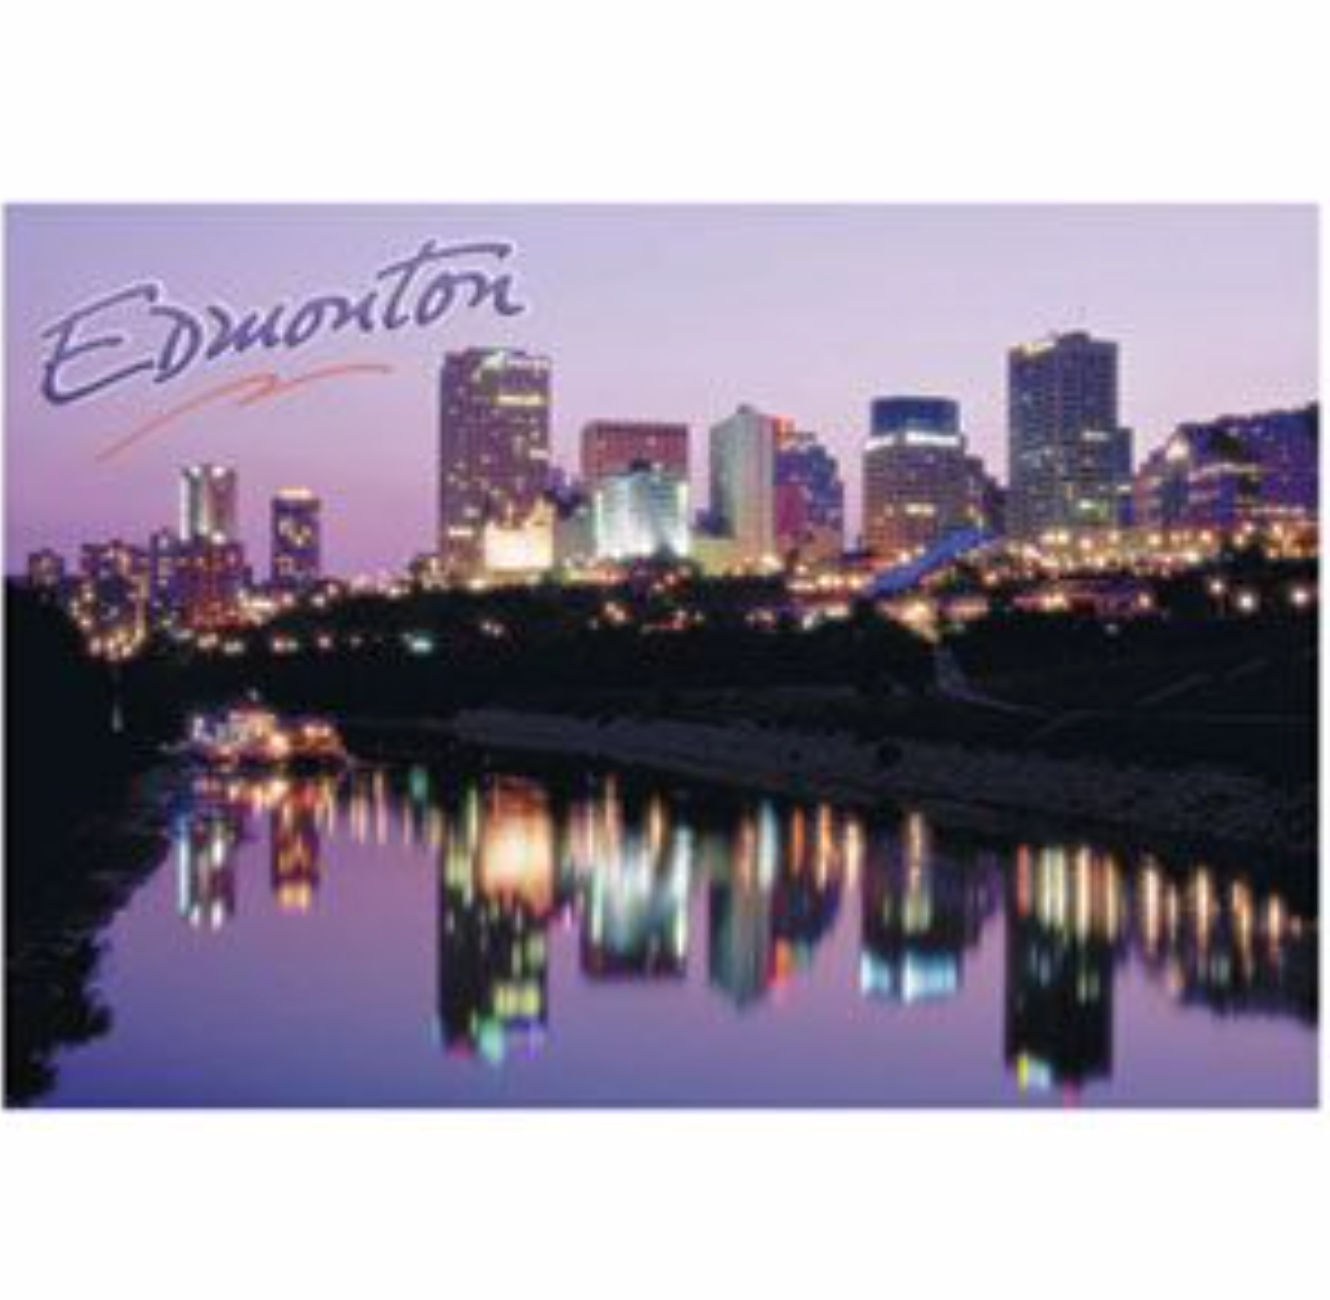 Postcard 5x7, River Valley, Edmonton